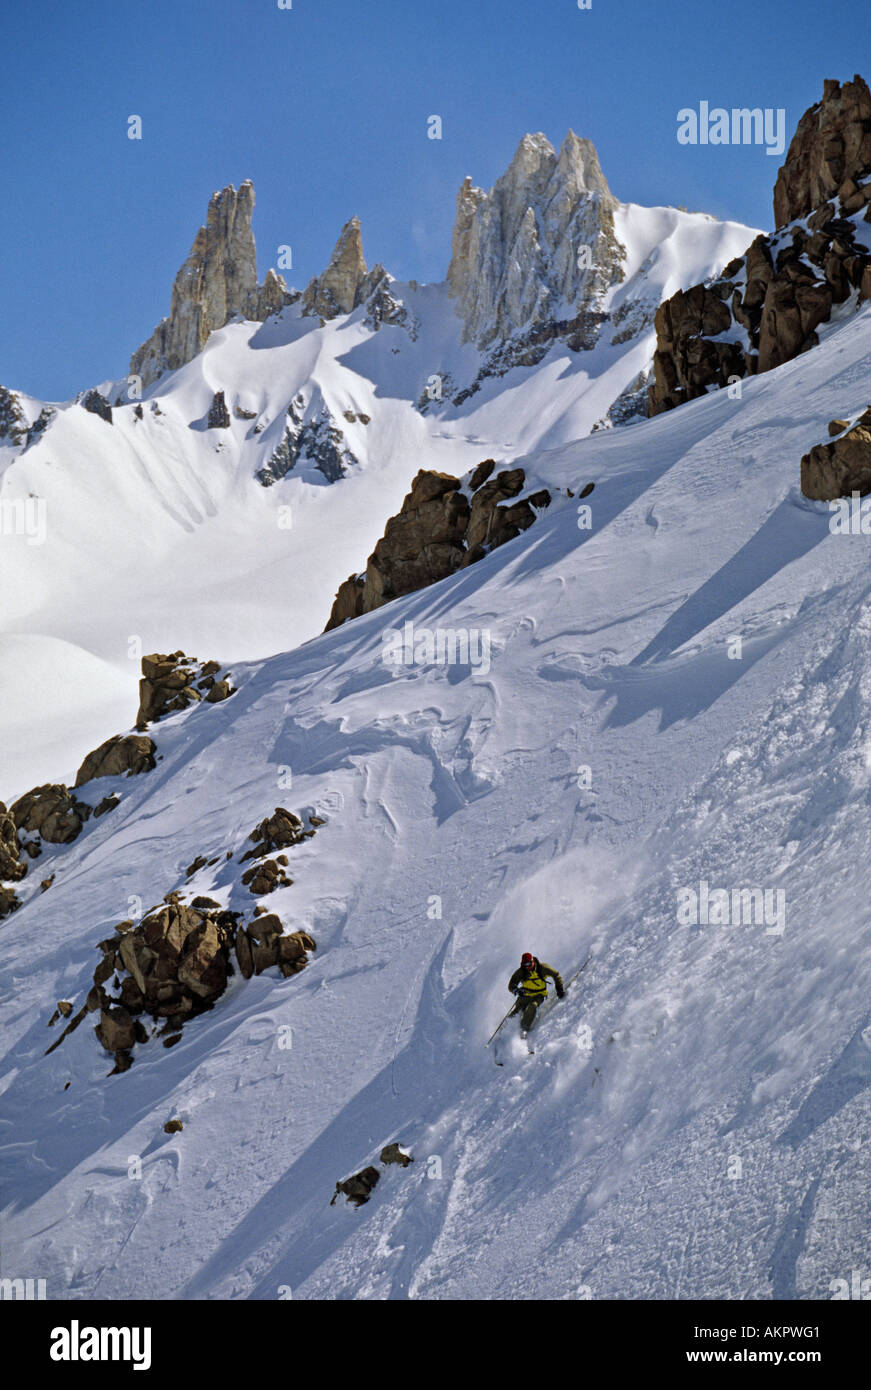 Chuck Loeffler skiing at Las Lenas resort, Argentina Stock Photo - Alamy